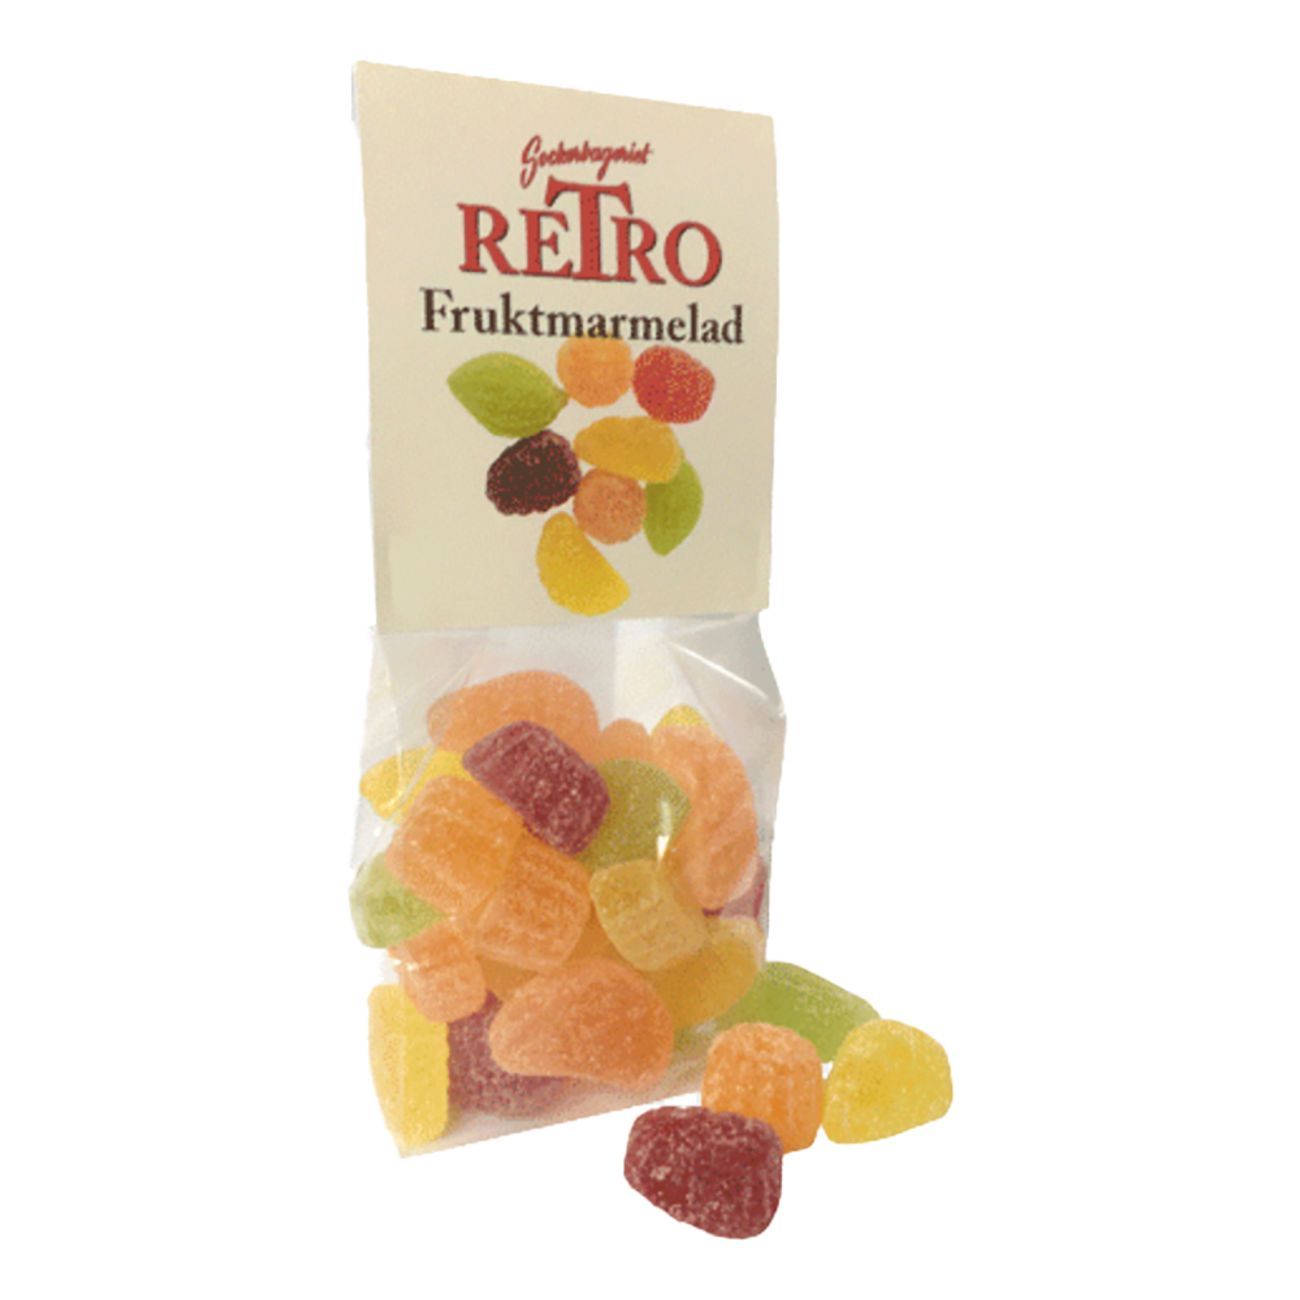 retro-fruktmarmelad-1